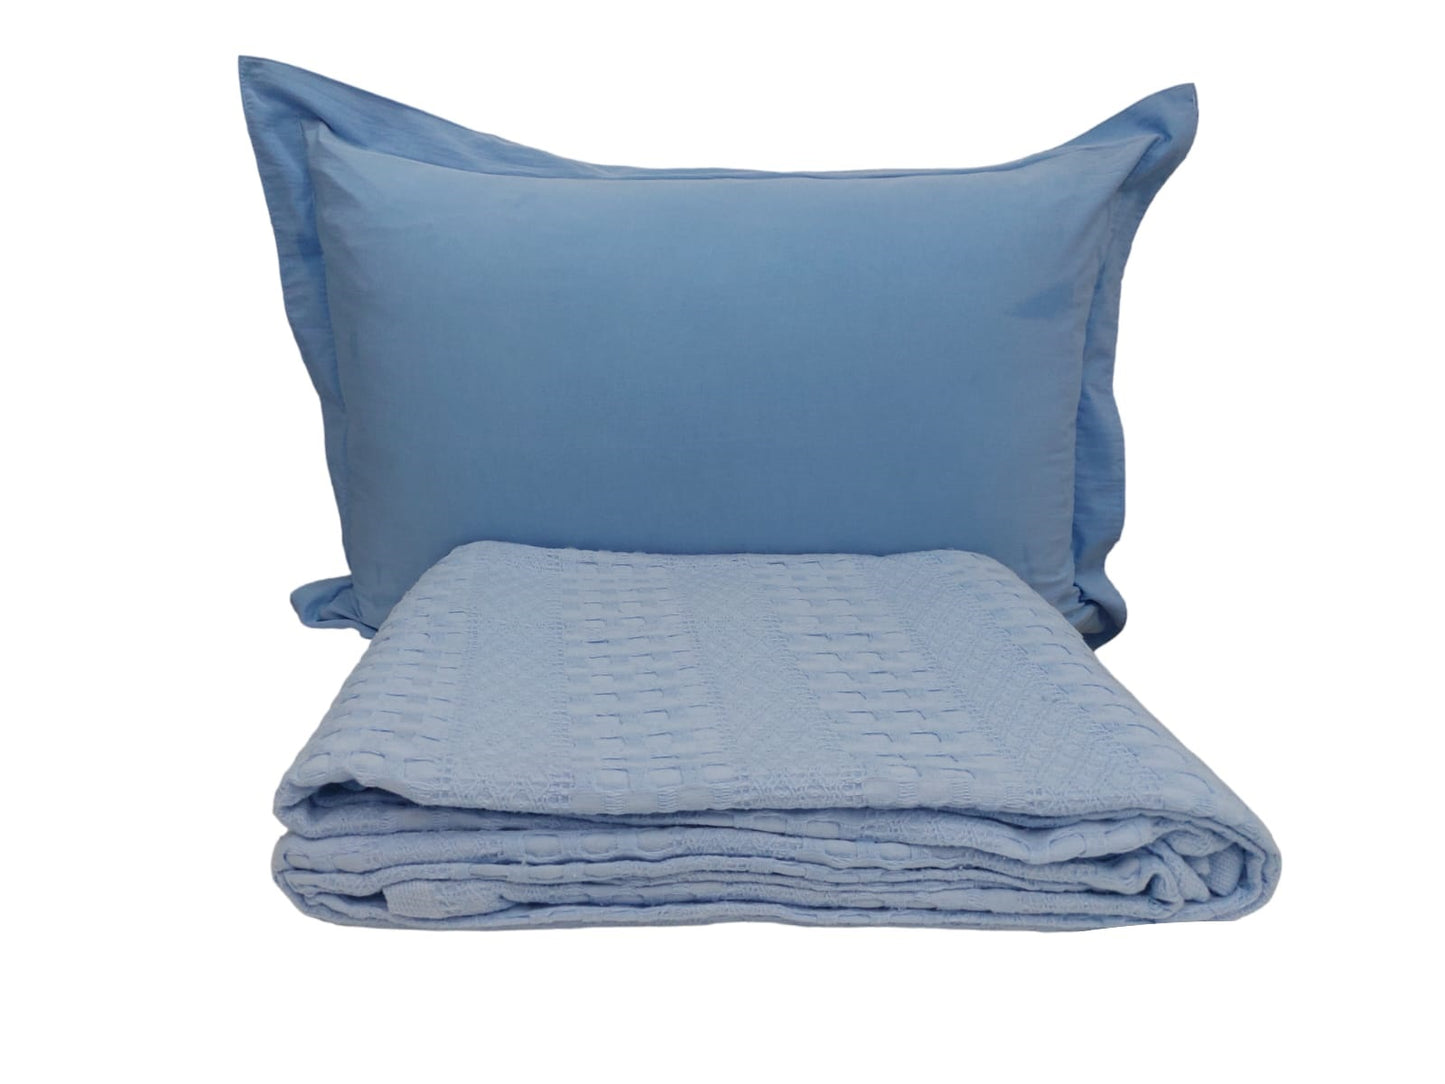 LETICIA summer bed spread 240x220cm sky blue